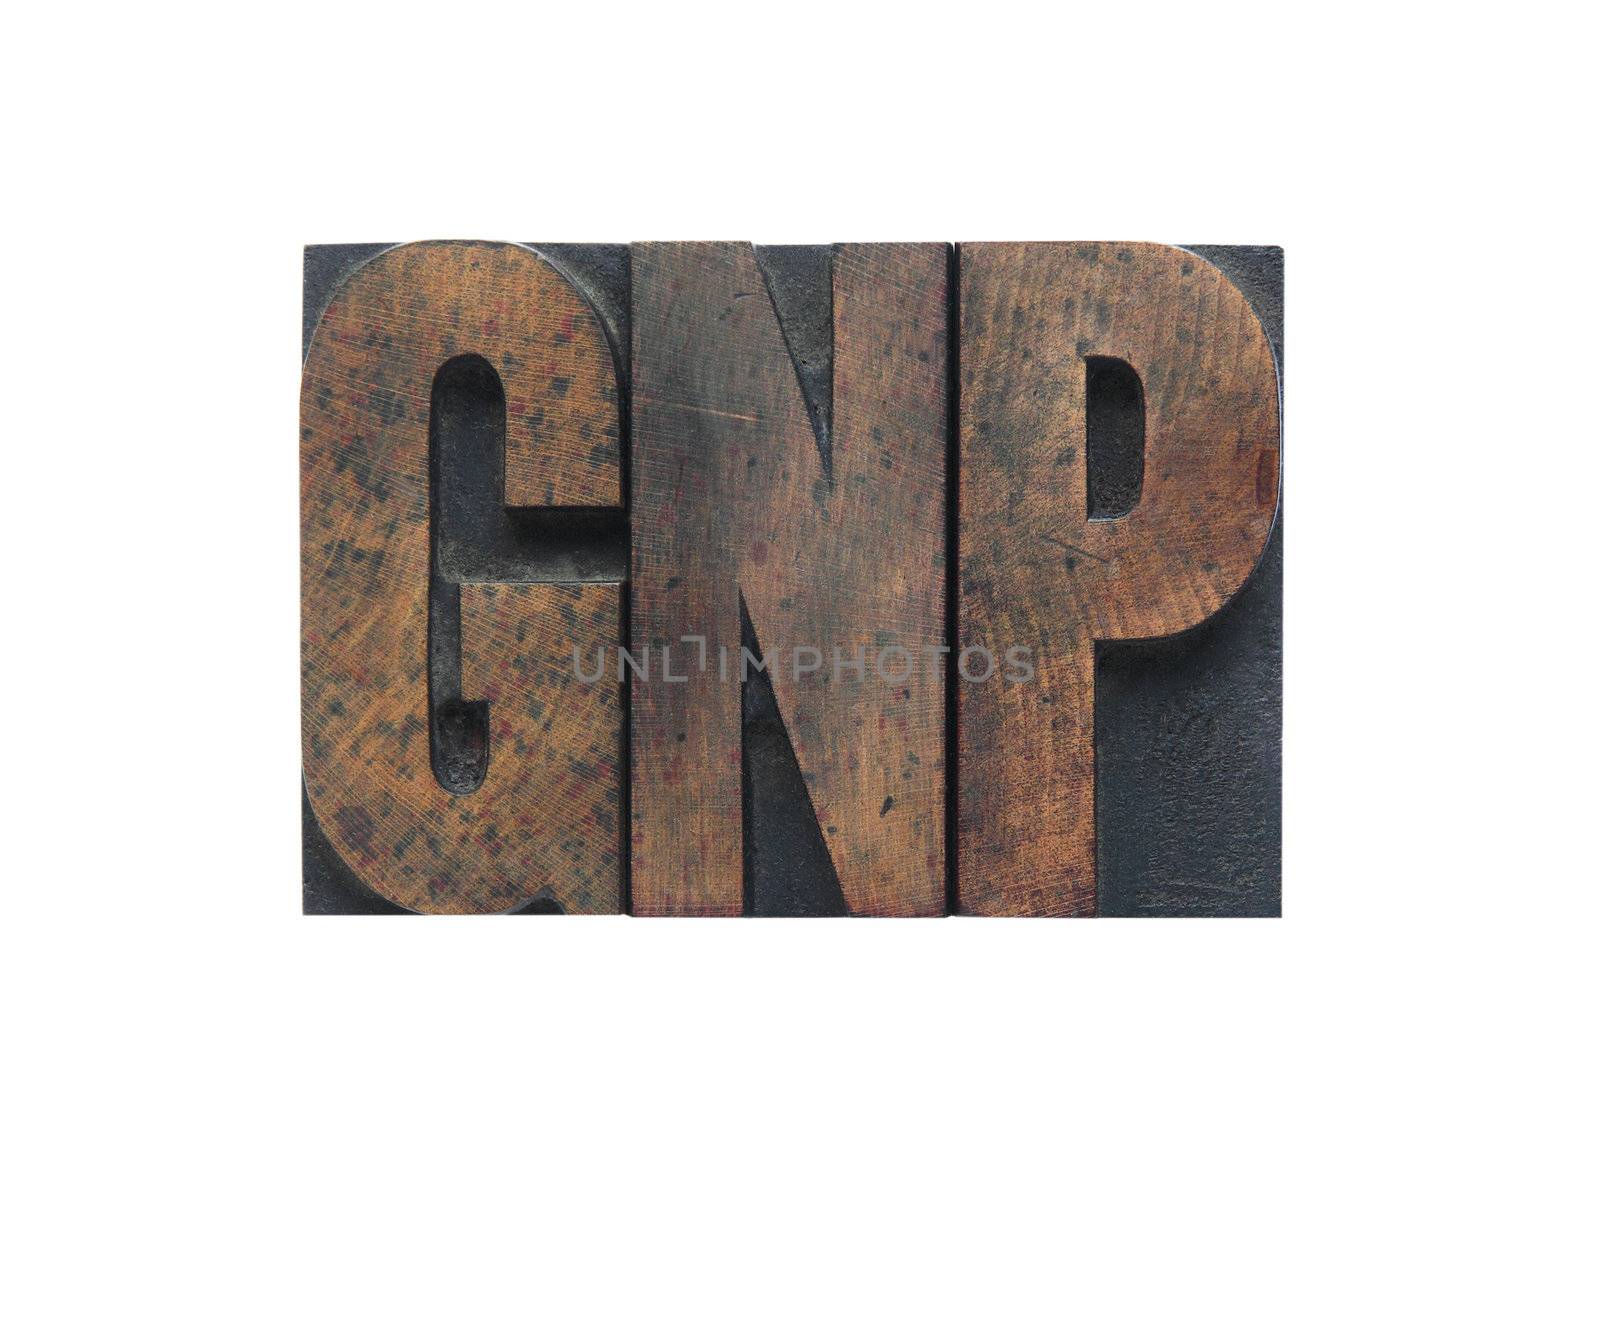 GNP by nebari